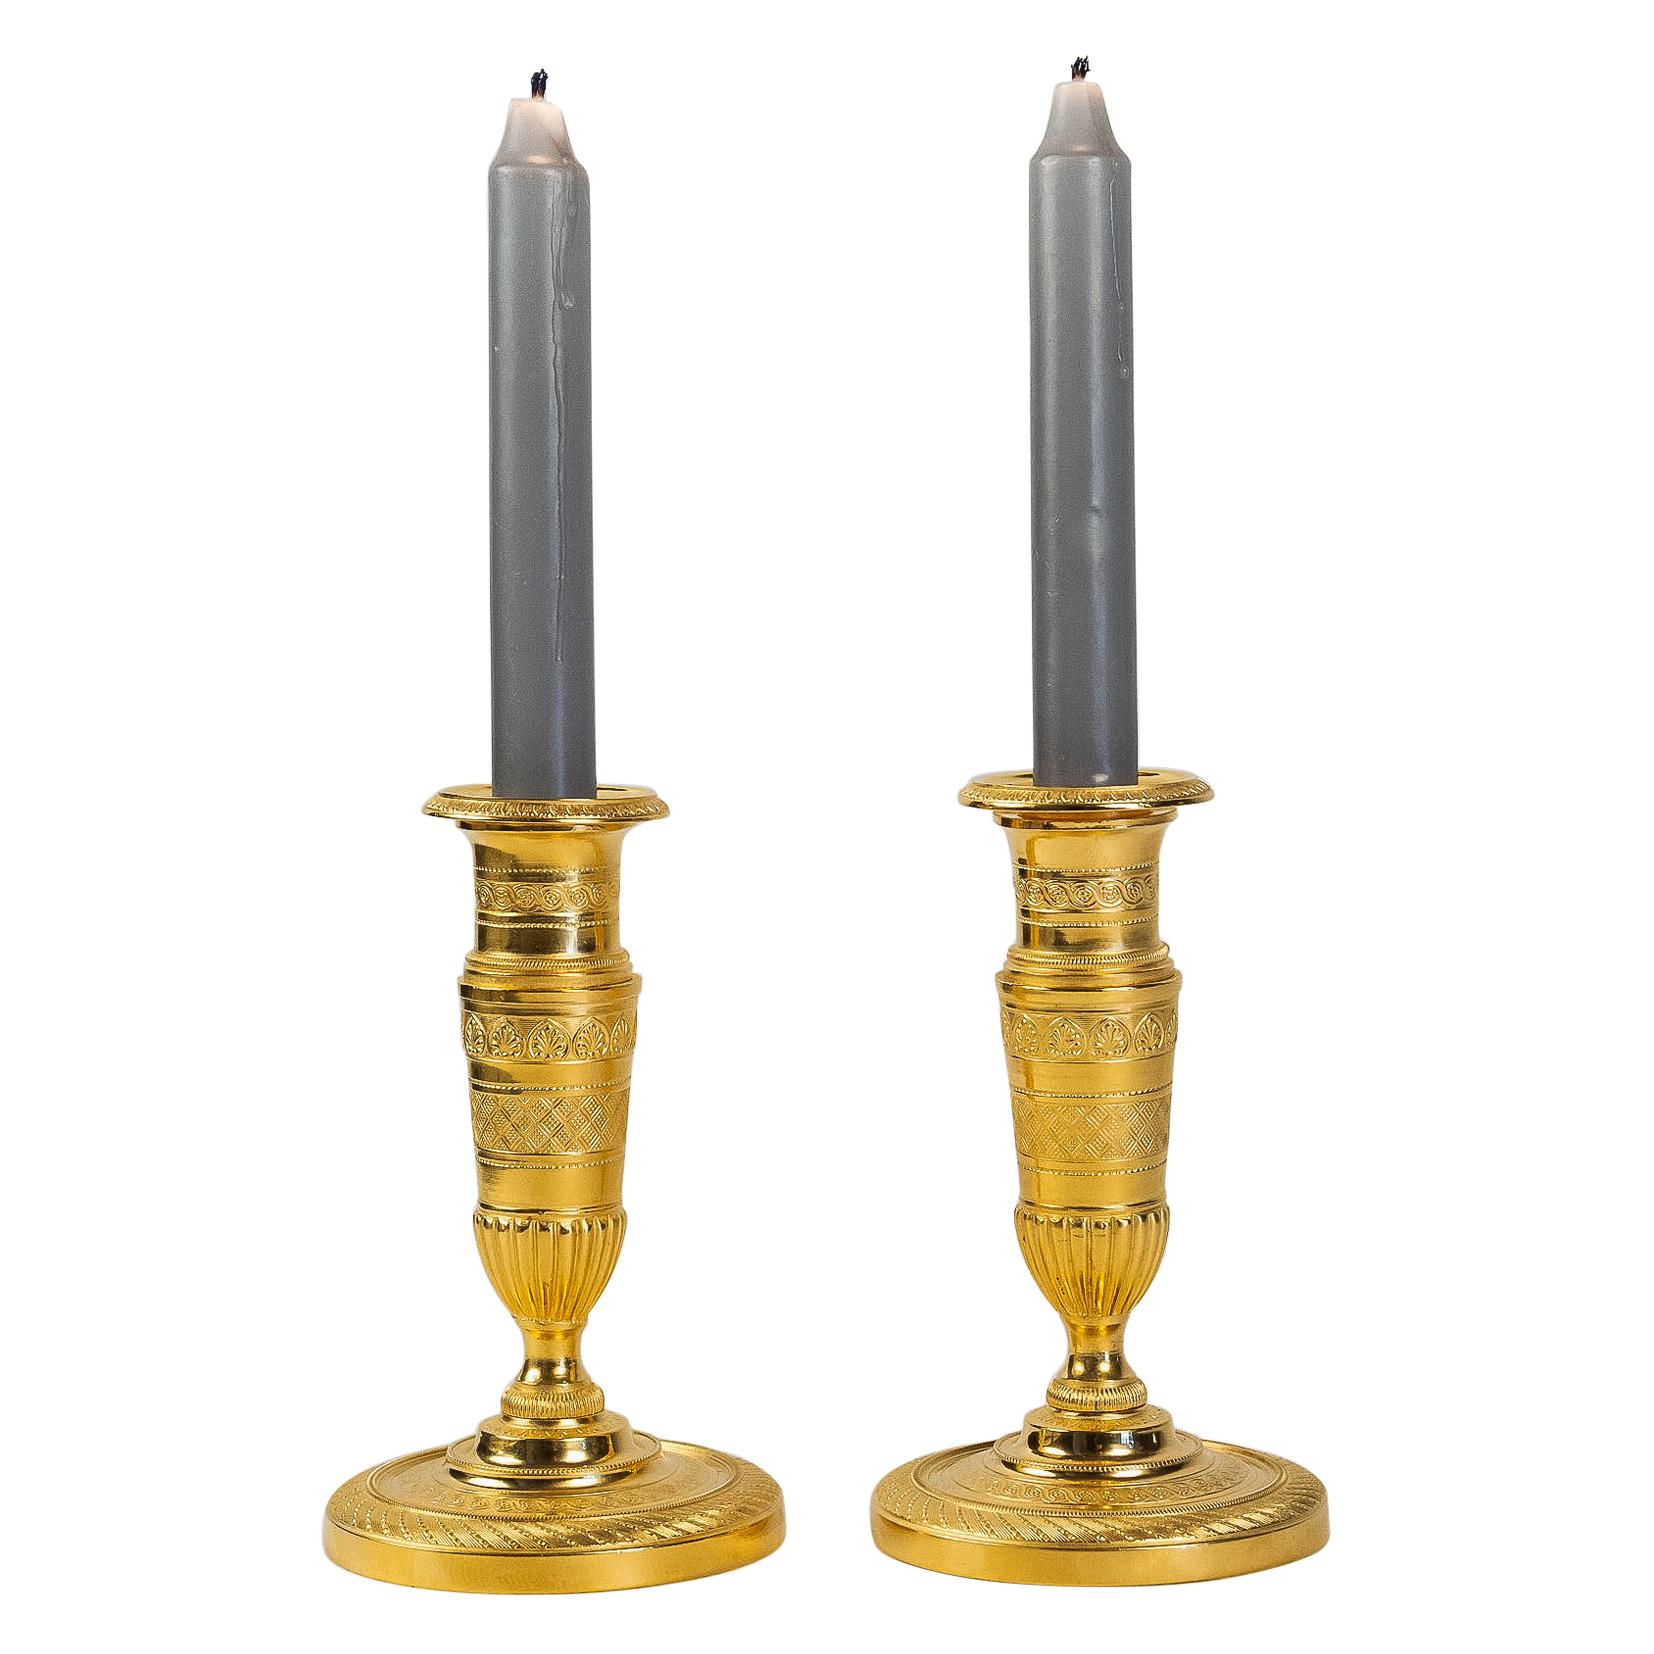 French Empire Period, Pair of Small Gilt-Bronze Candlesticks, circa 1805